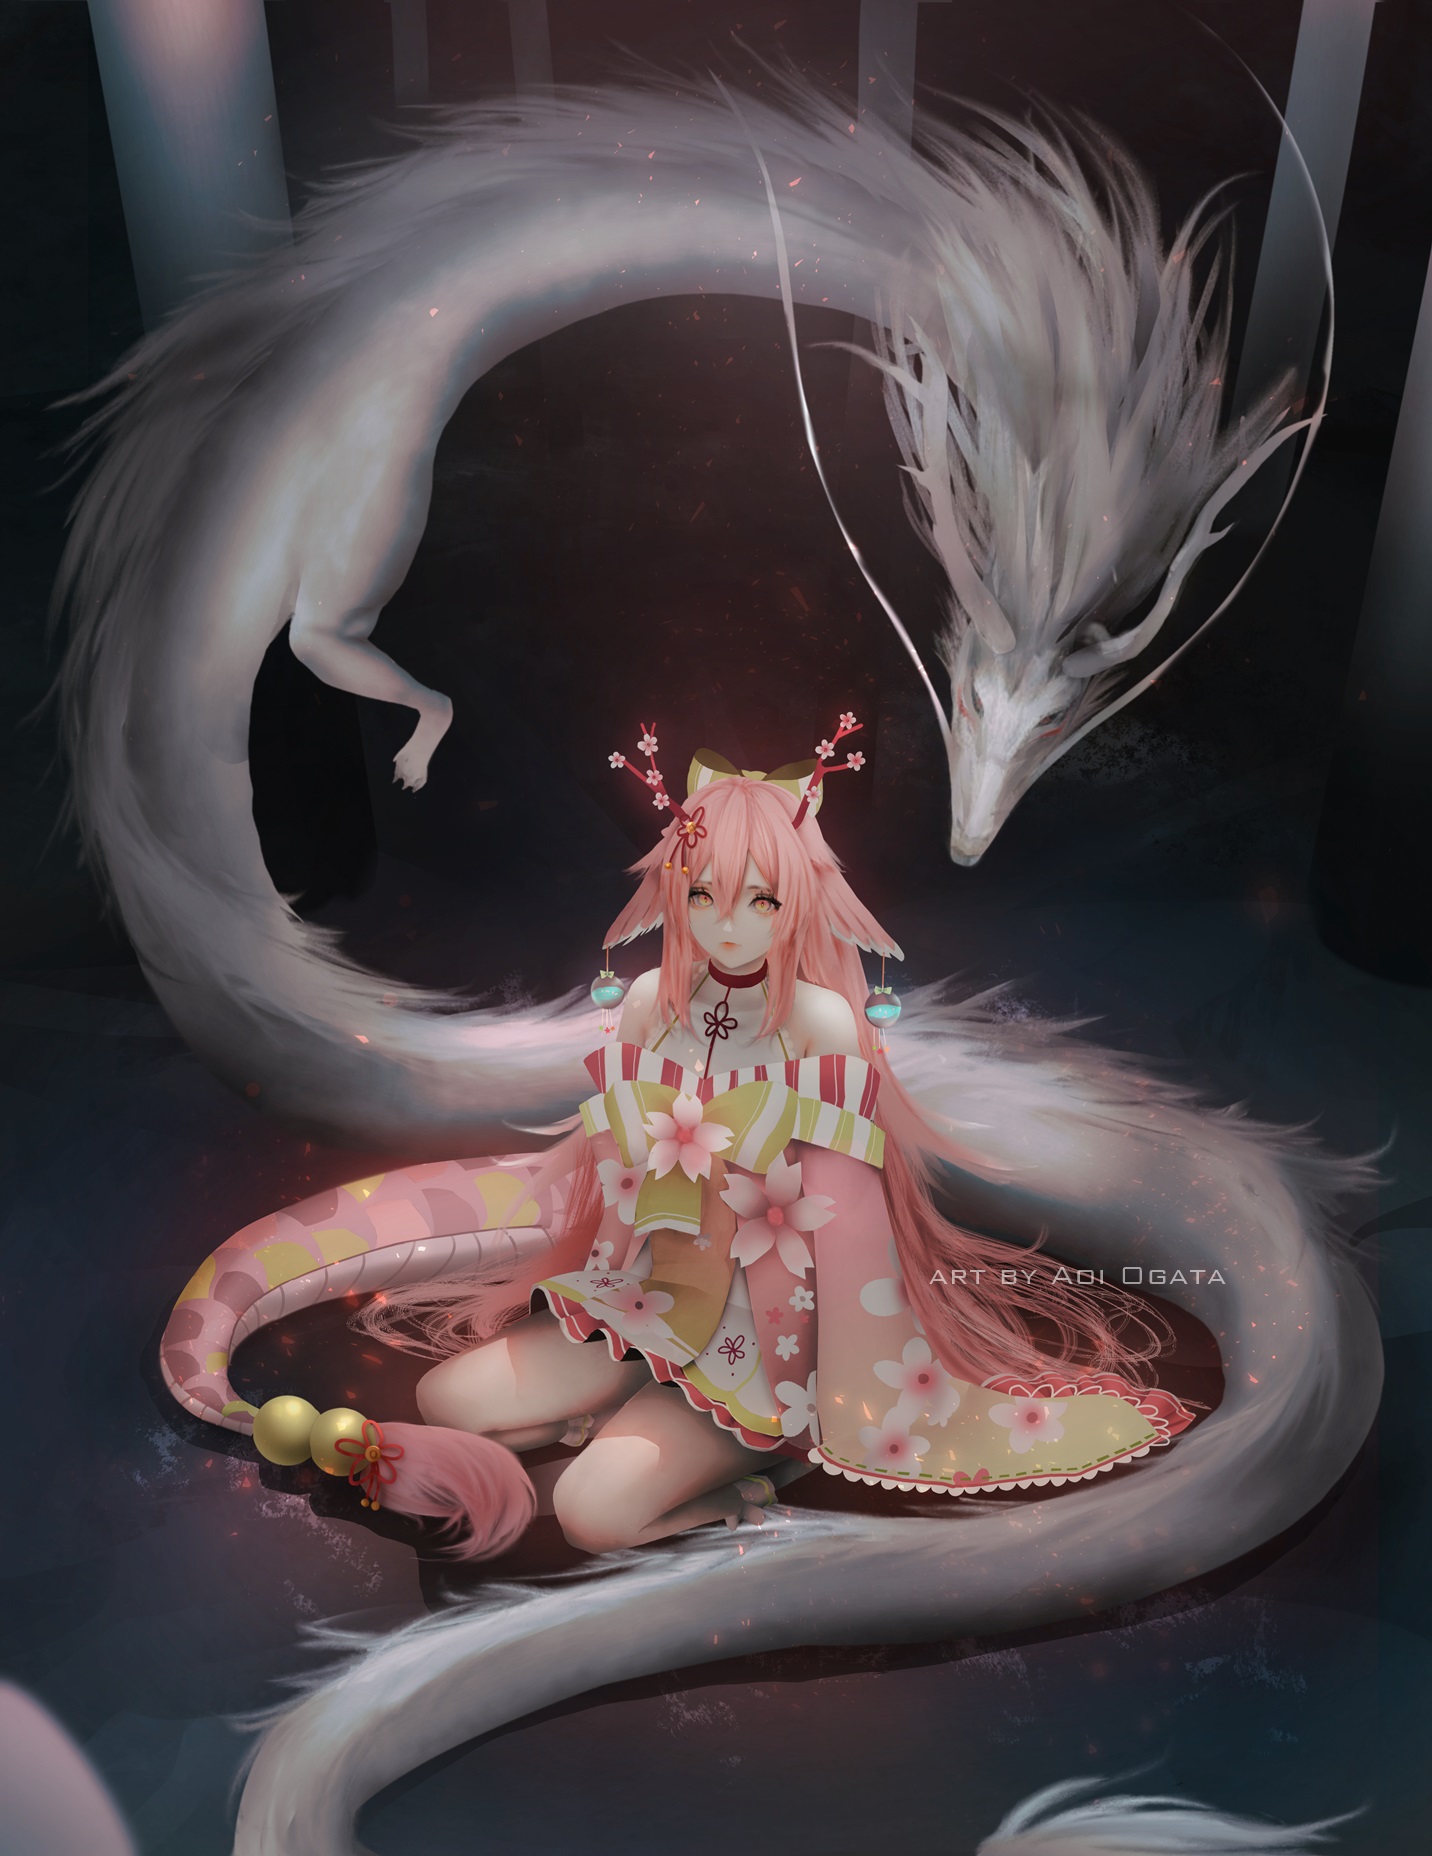 anime girl with dragon horns